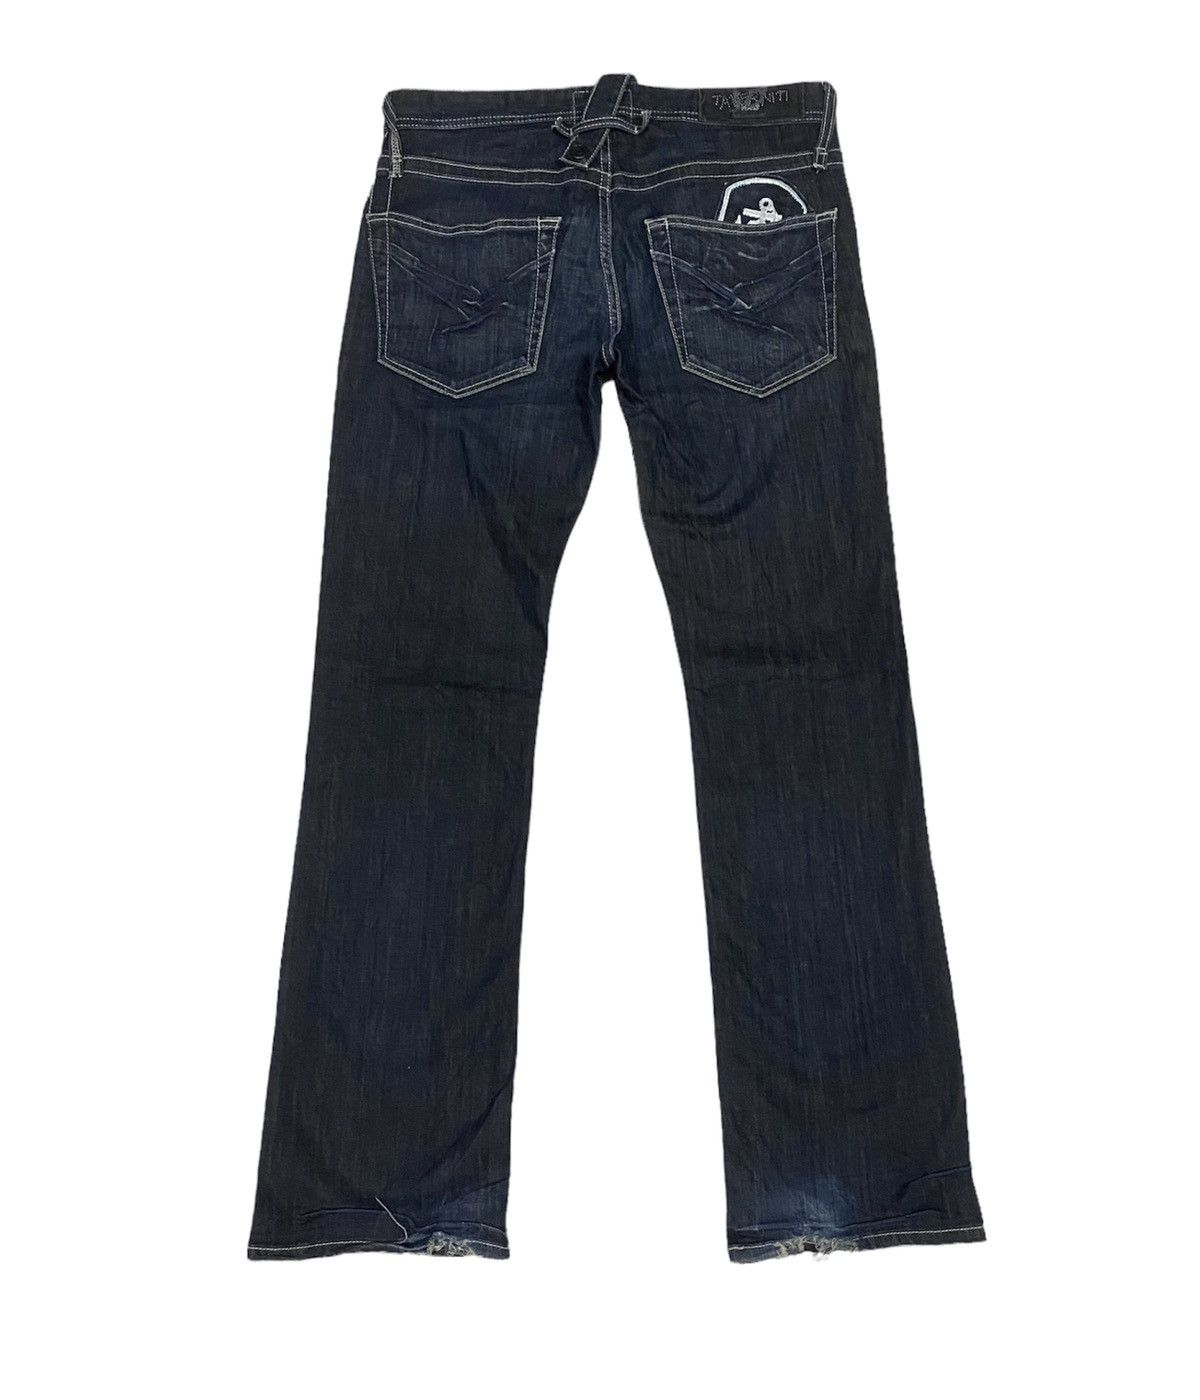 Taverniti TAVERNITI Jeans by Jimmy x Rare Design | Grailed